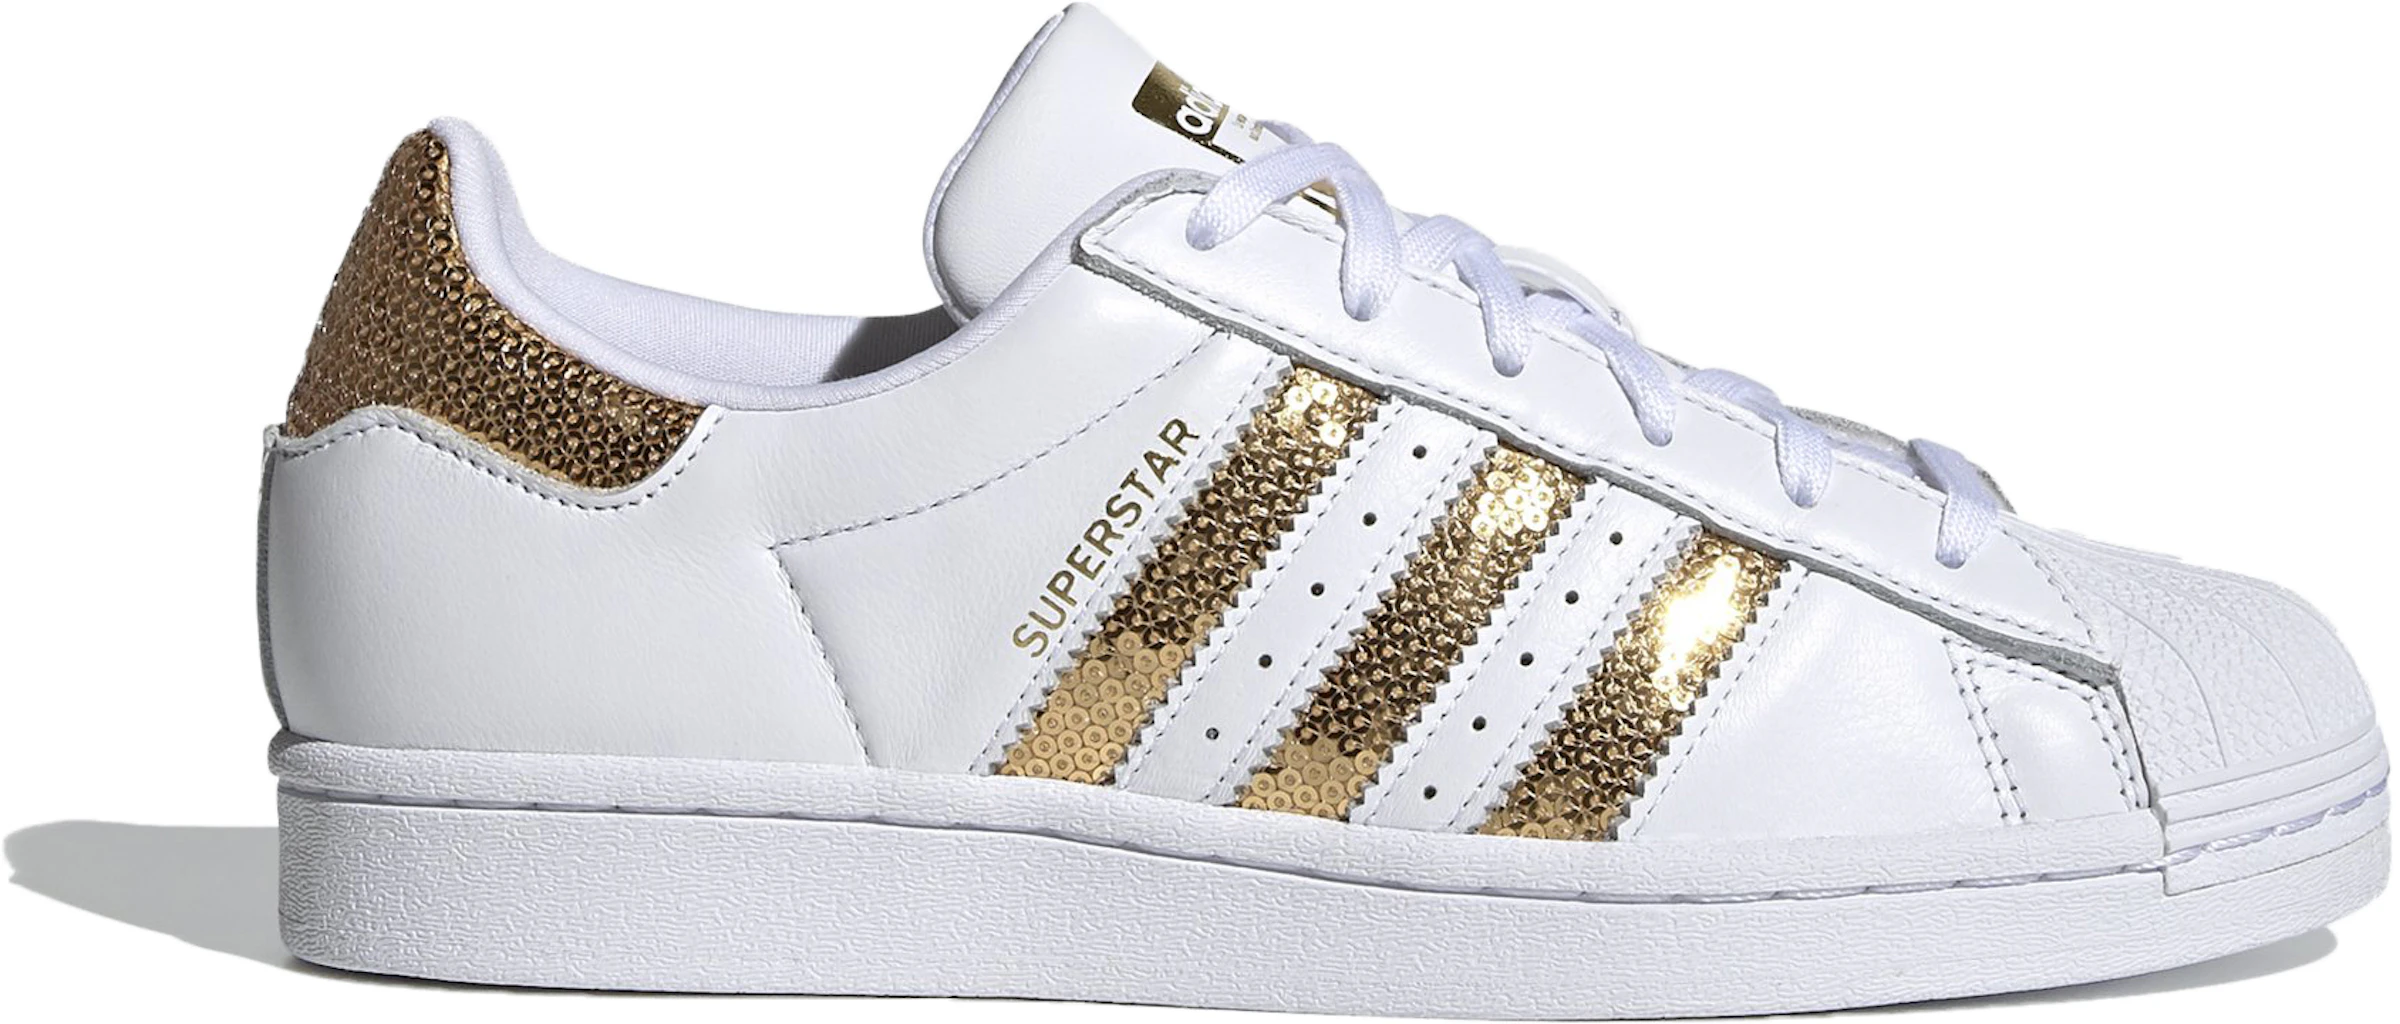 bibliotheek Bank Pa adidas Superstar White Gold Sequins (Women's) - G55658 - US